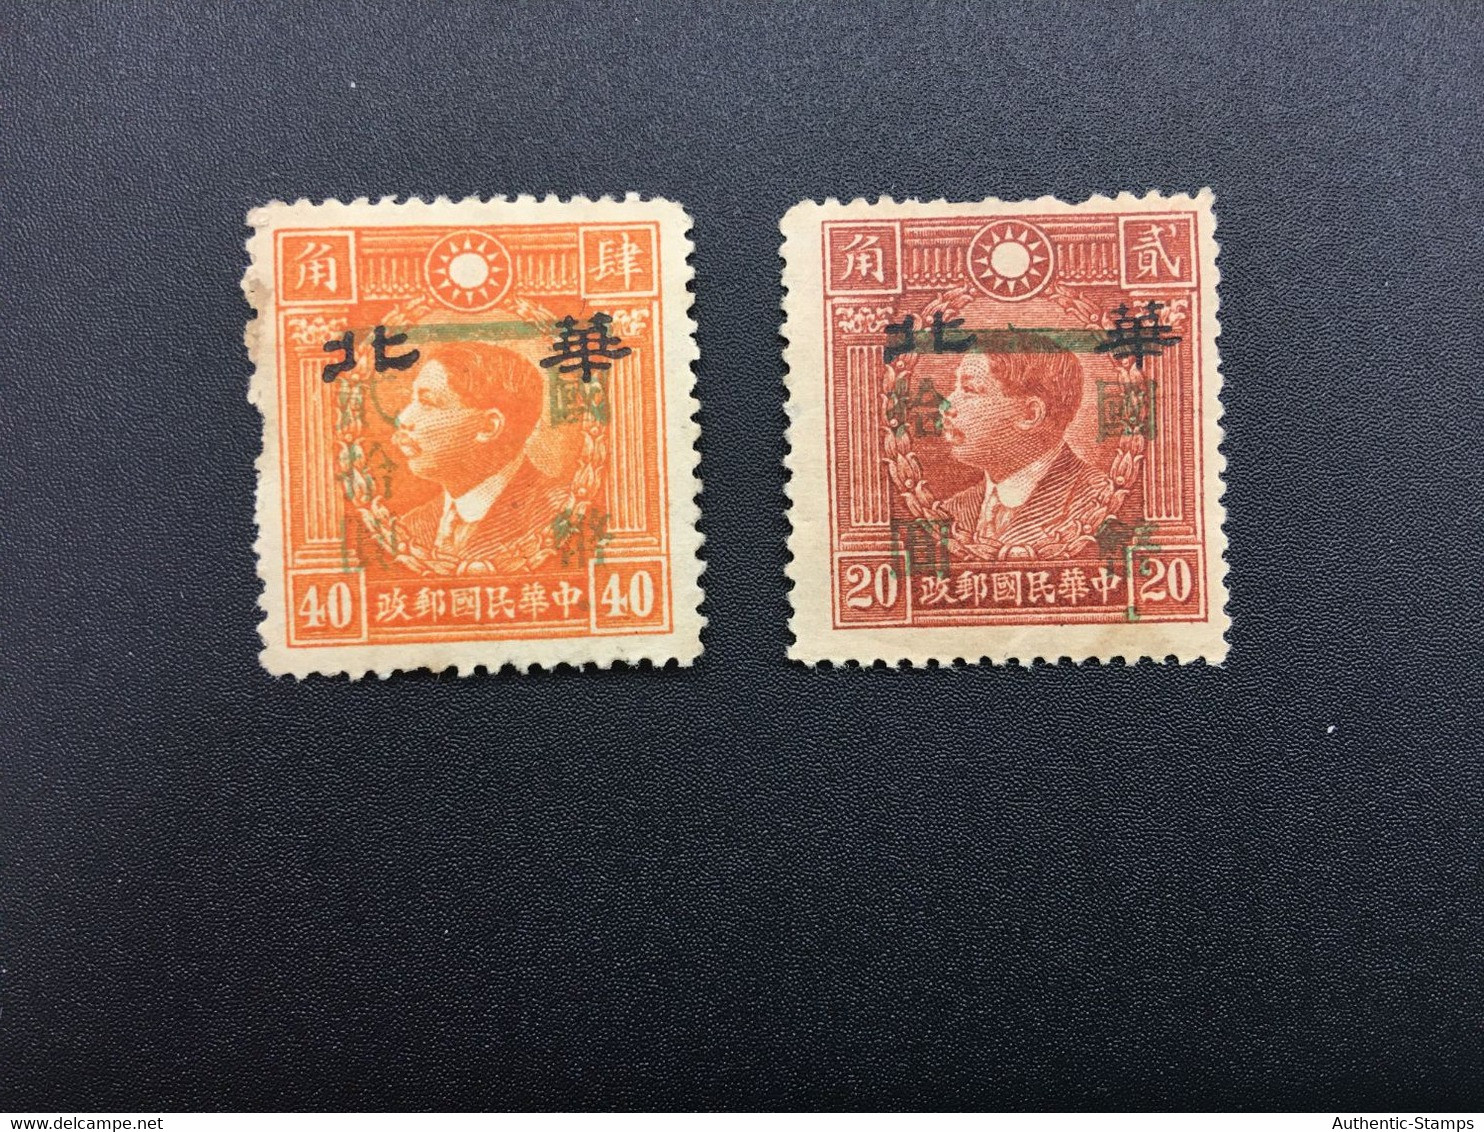 CHINA STAMP, Set, Rare Overprint, UnUSED, TIMBRO, STEMPEL, CINA, CHINE, LIST 6531 - 1941-45 Chine Du Nord